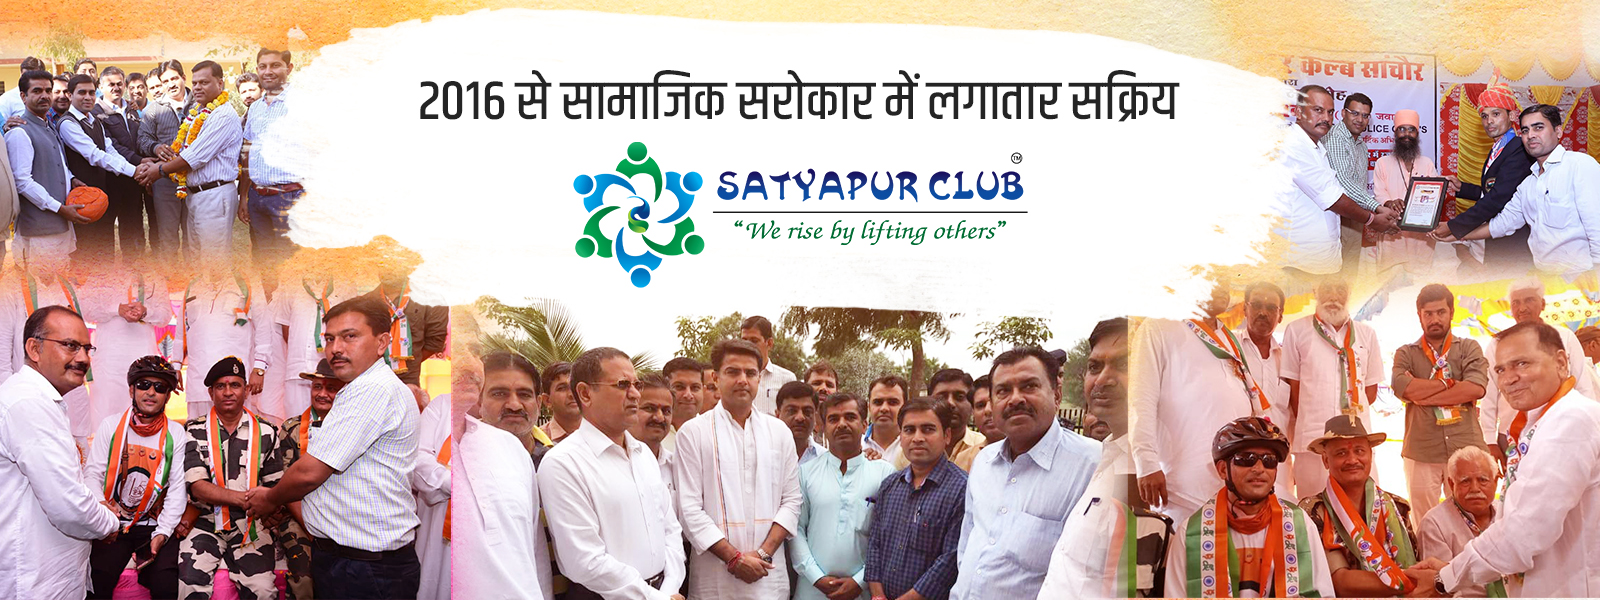 Satyapur Club